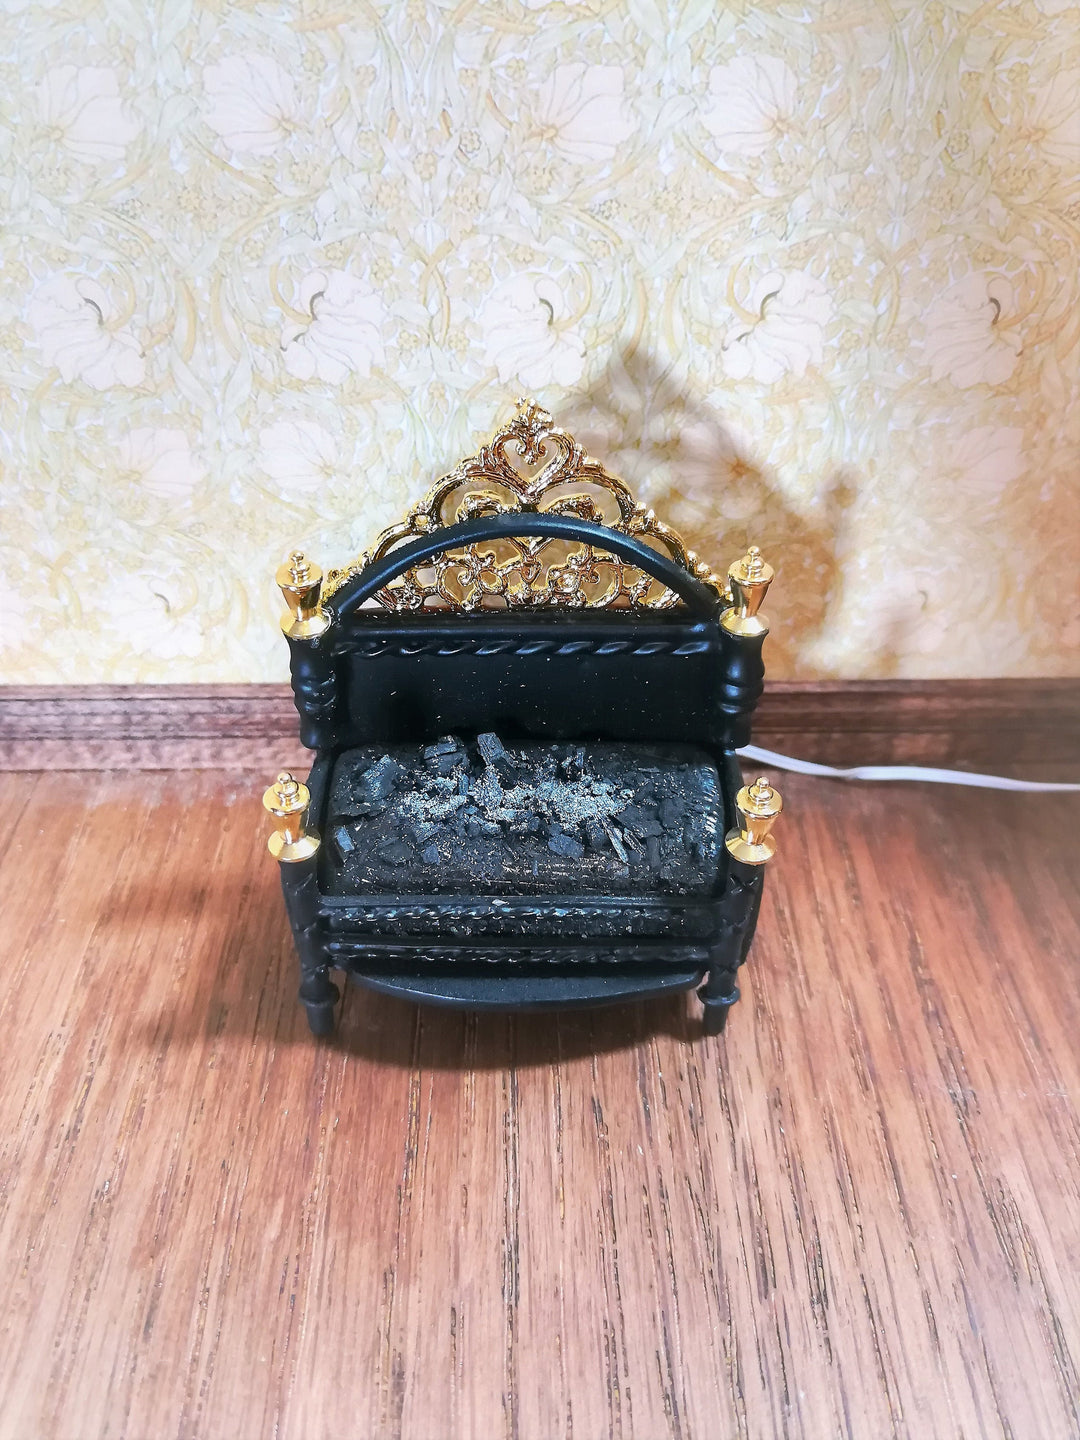 Dollhouse Lit Fire Basket Fireplace Insert Coals 12v with Plug 1:12 Scale Miniature